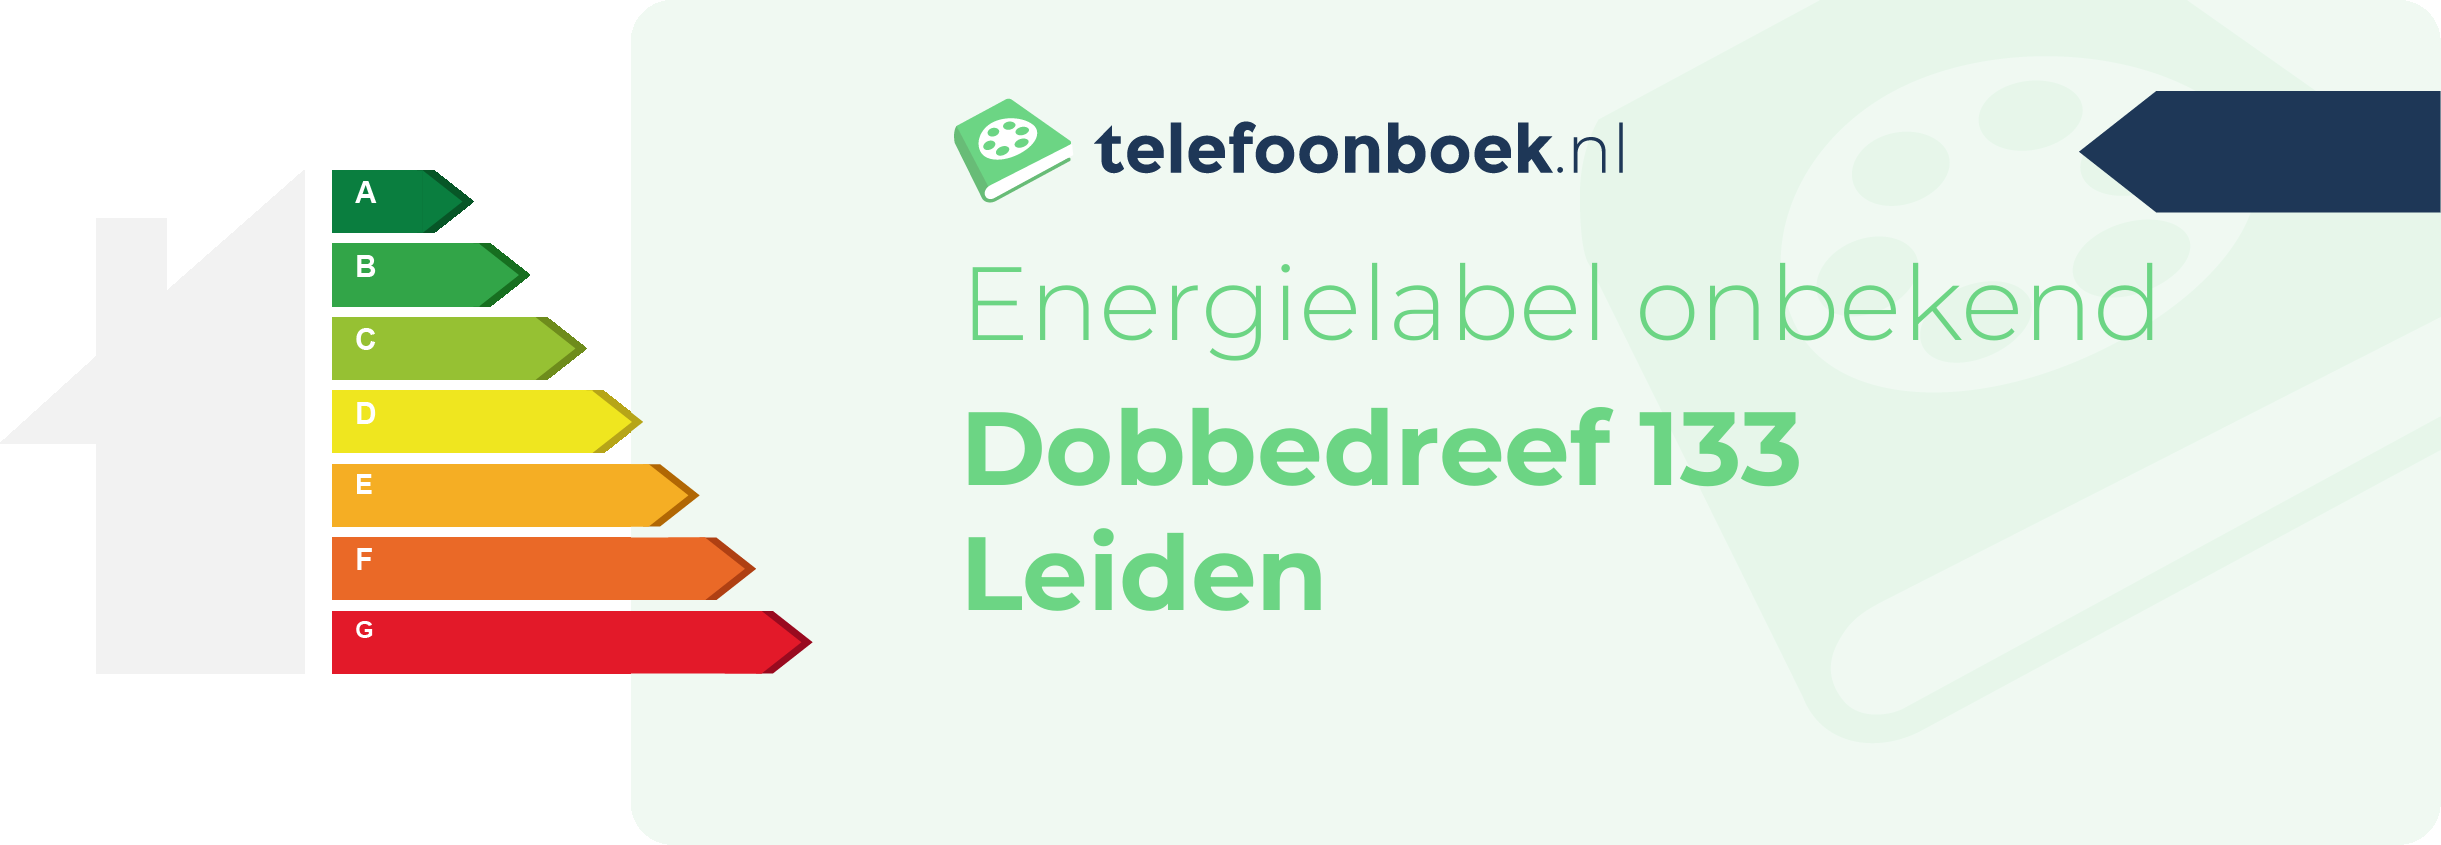 Energielabel Dobbedreef 133 Leiden